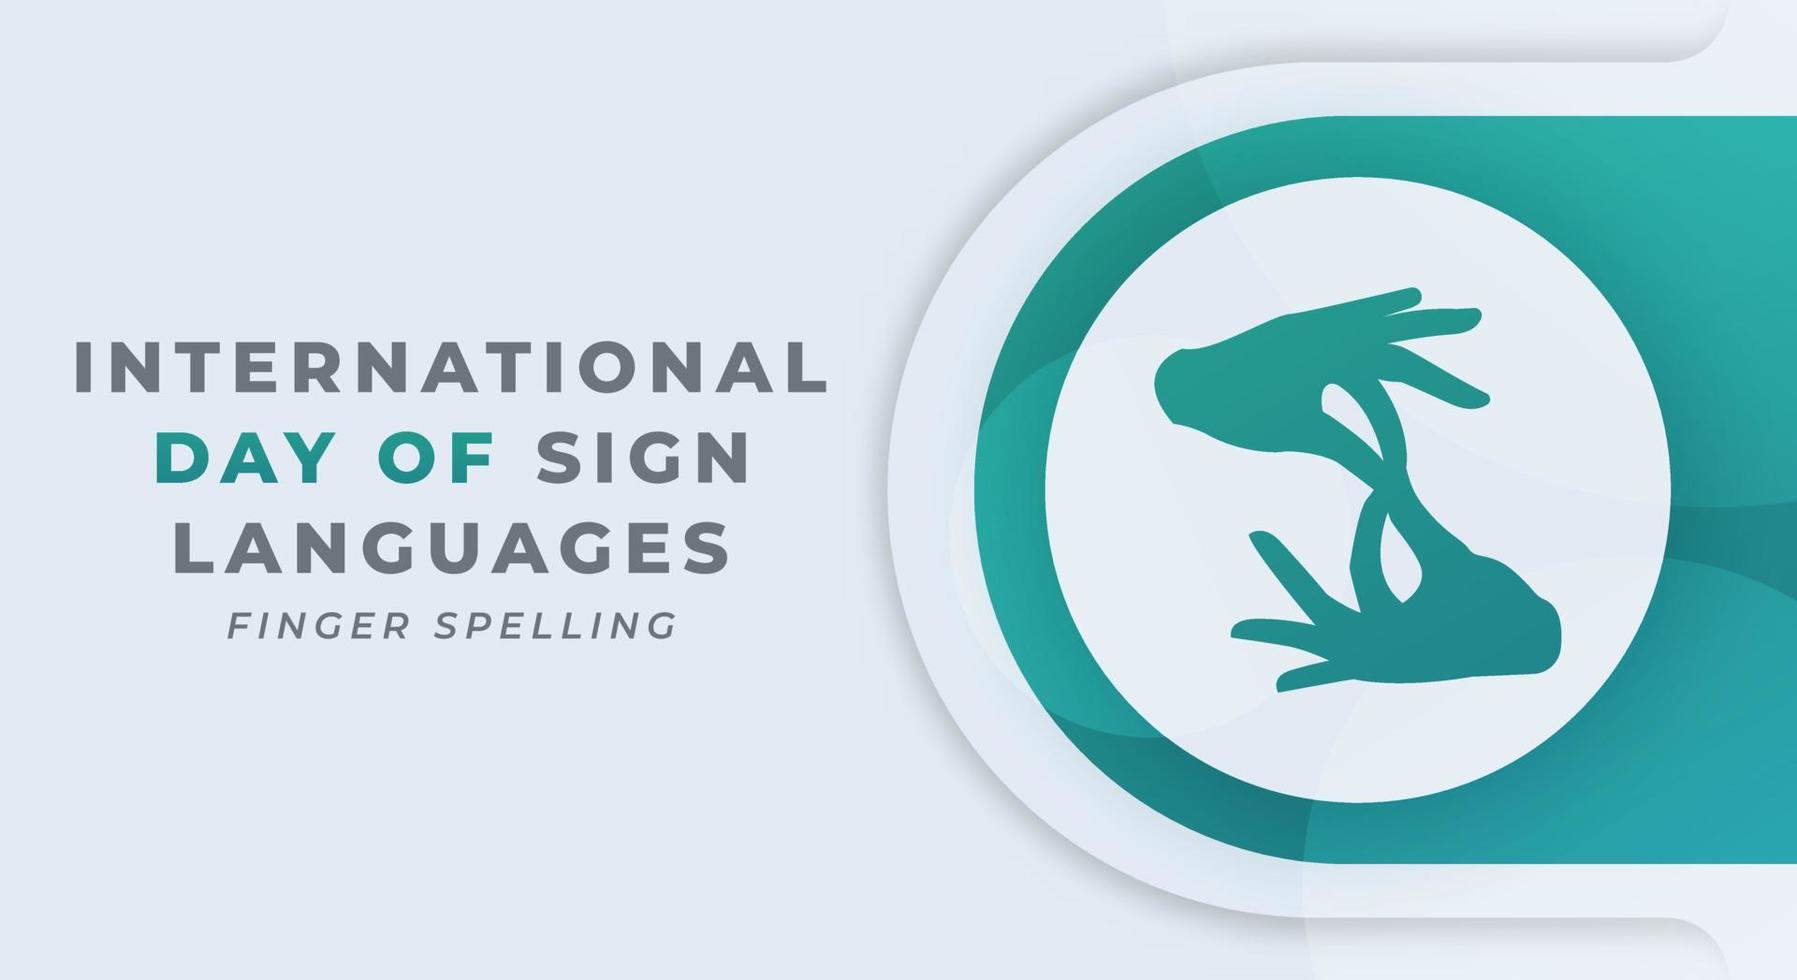 Happy International Day of Sign Languages Celebration Vector Design Illustration for Background, Poster, Banner, Advertising, Greeting Card